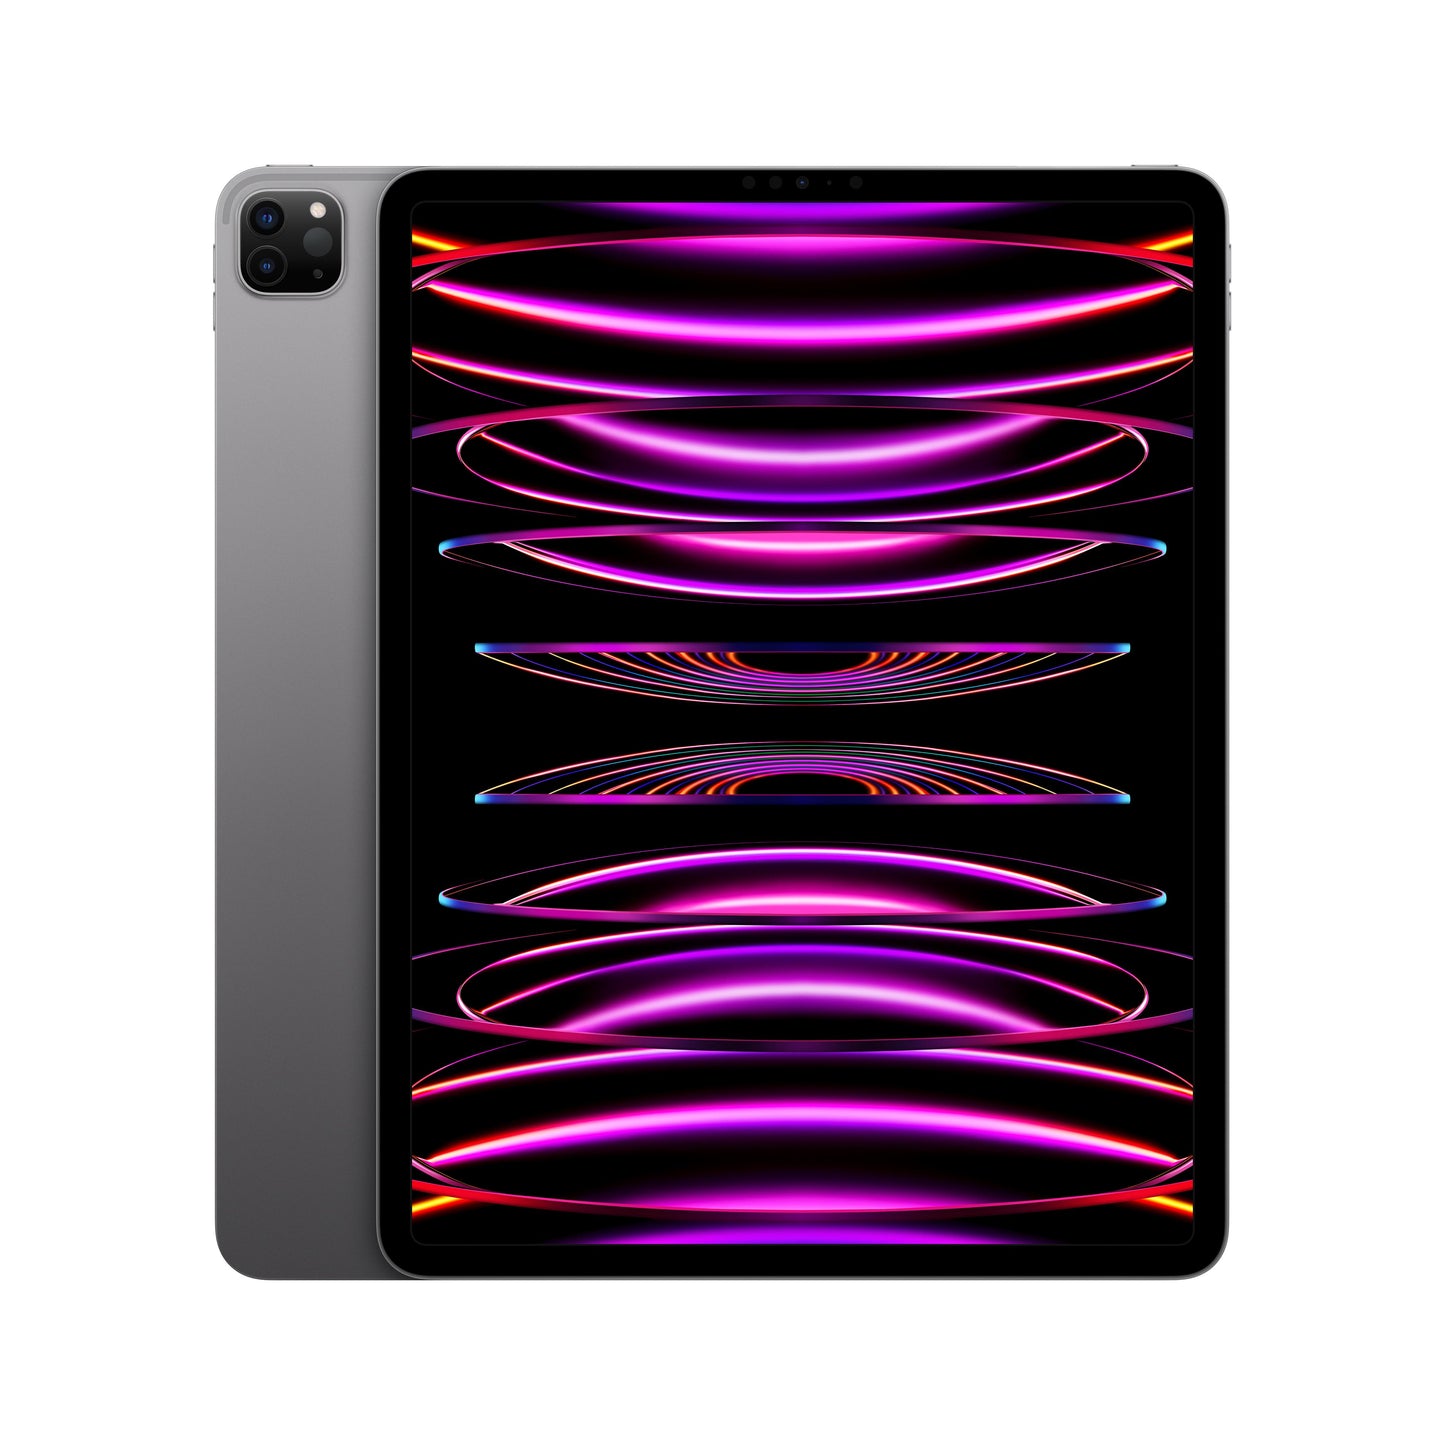 2022 12.9-inch iPad Pro Wi-Fi 256GB - Space Grey (6th generation)